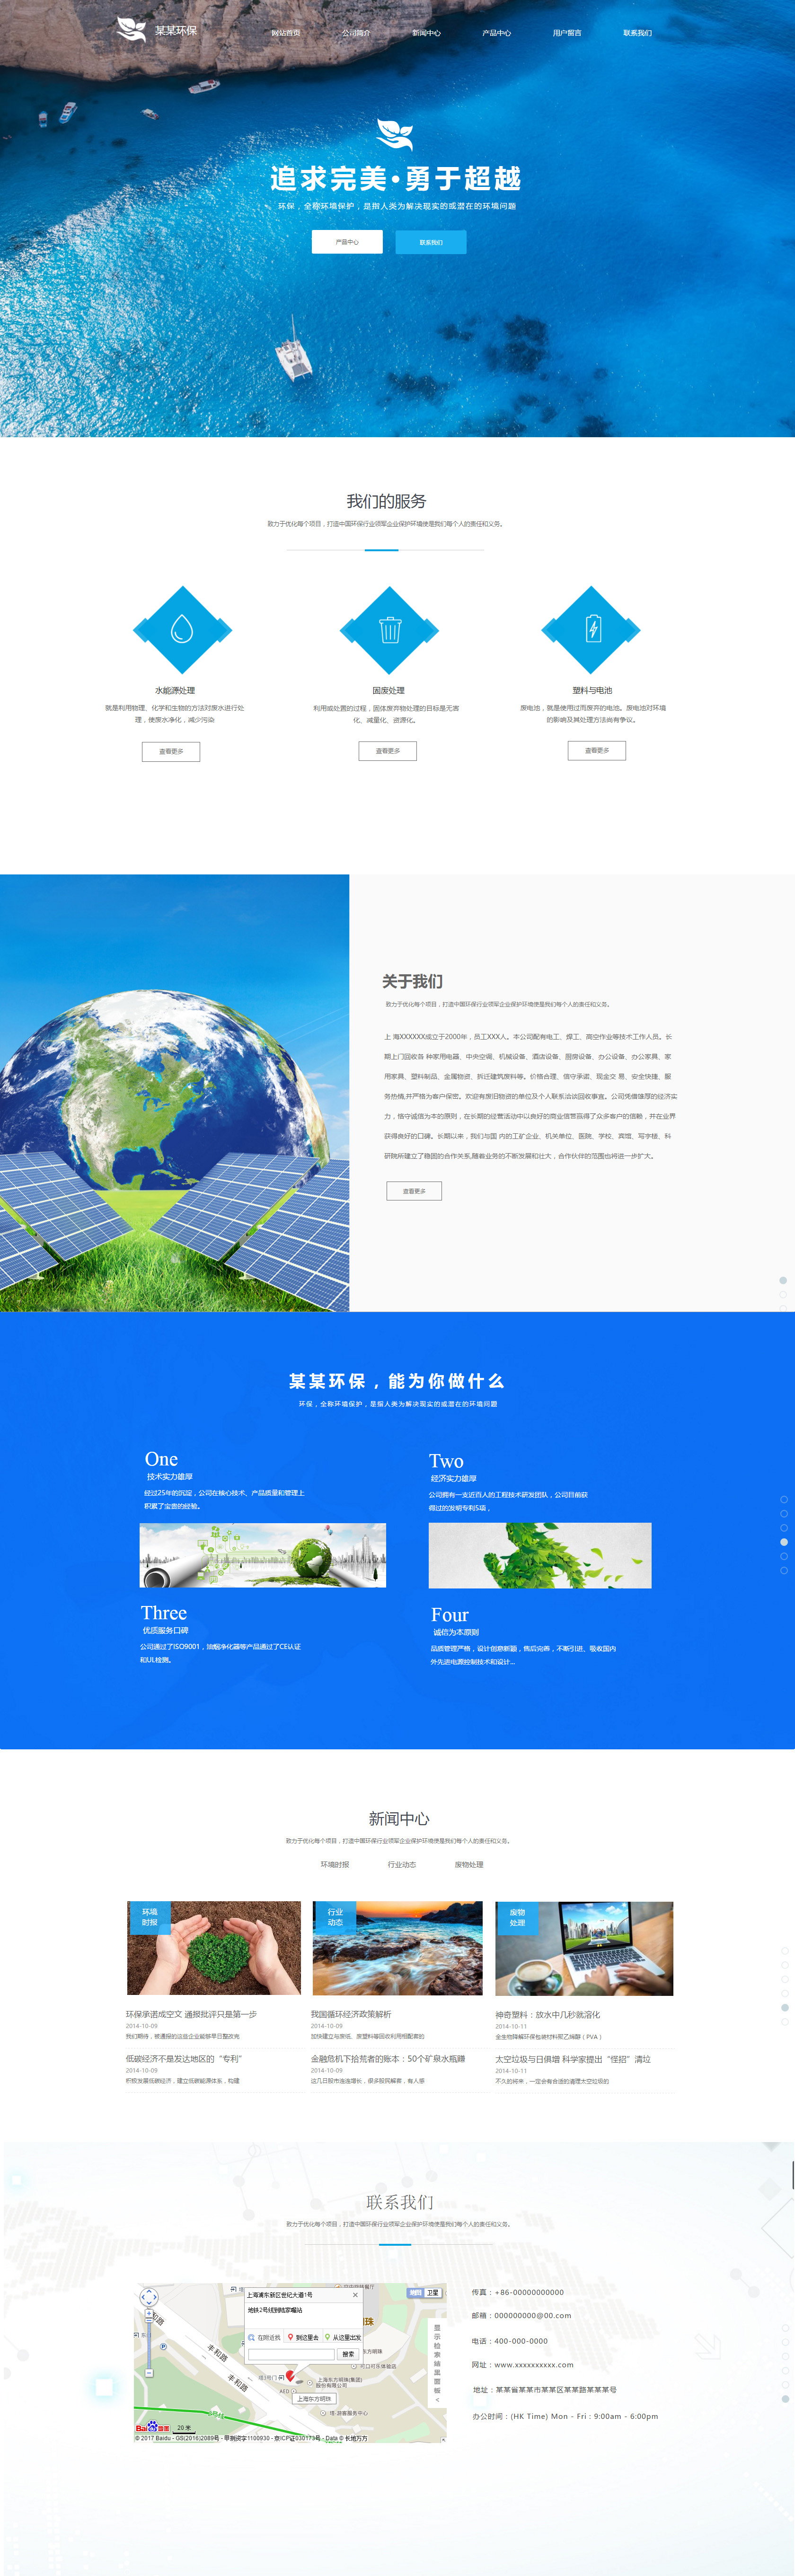 环保网站模板-environment-1225786